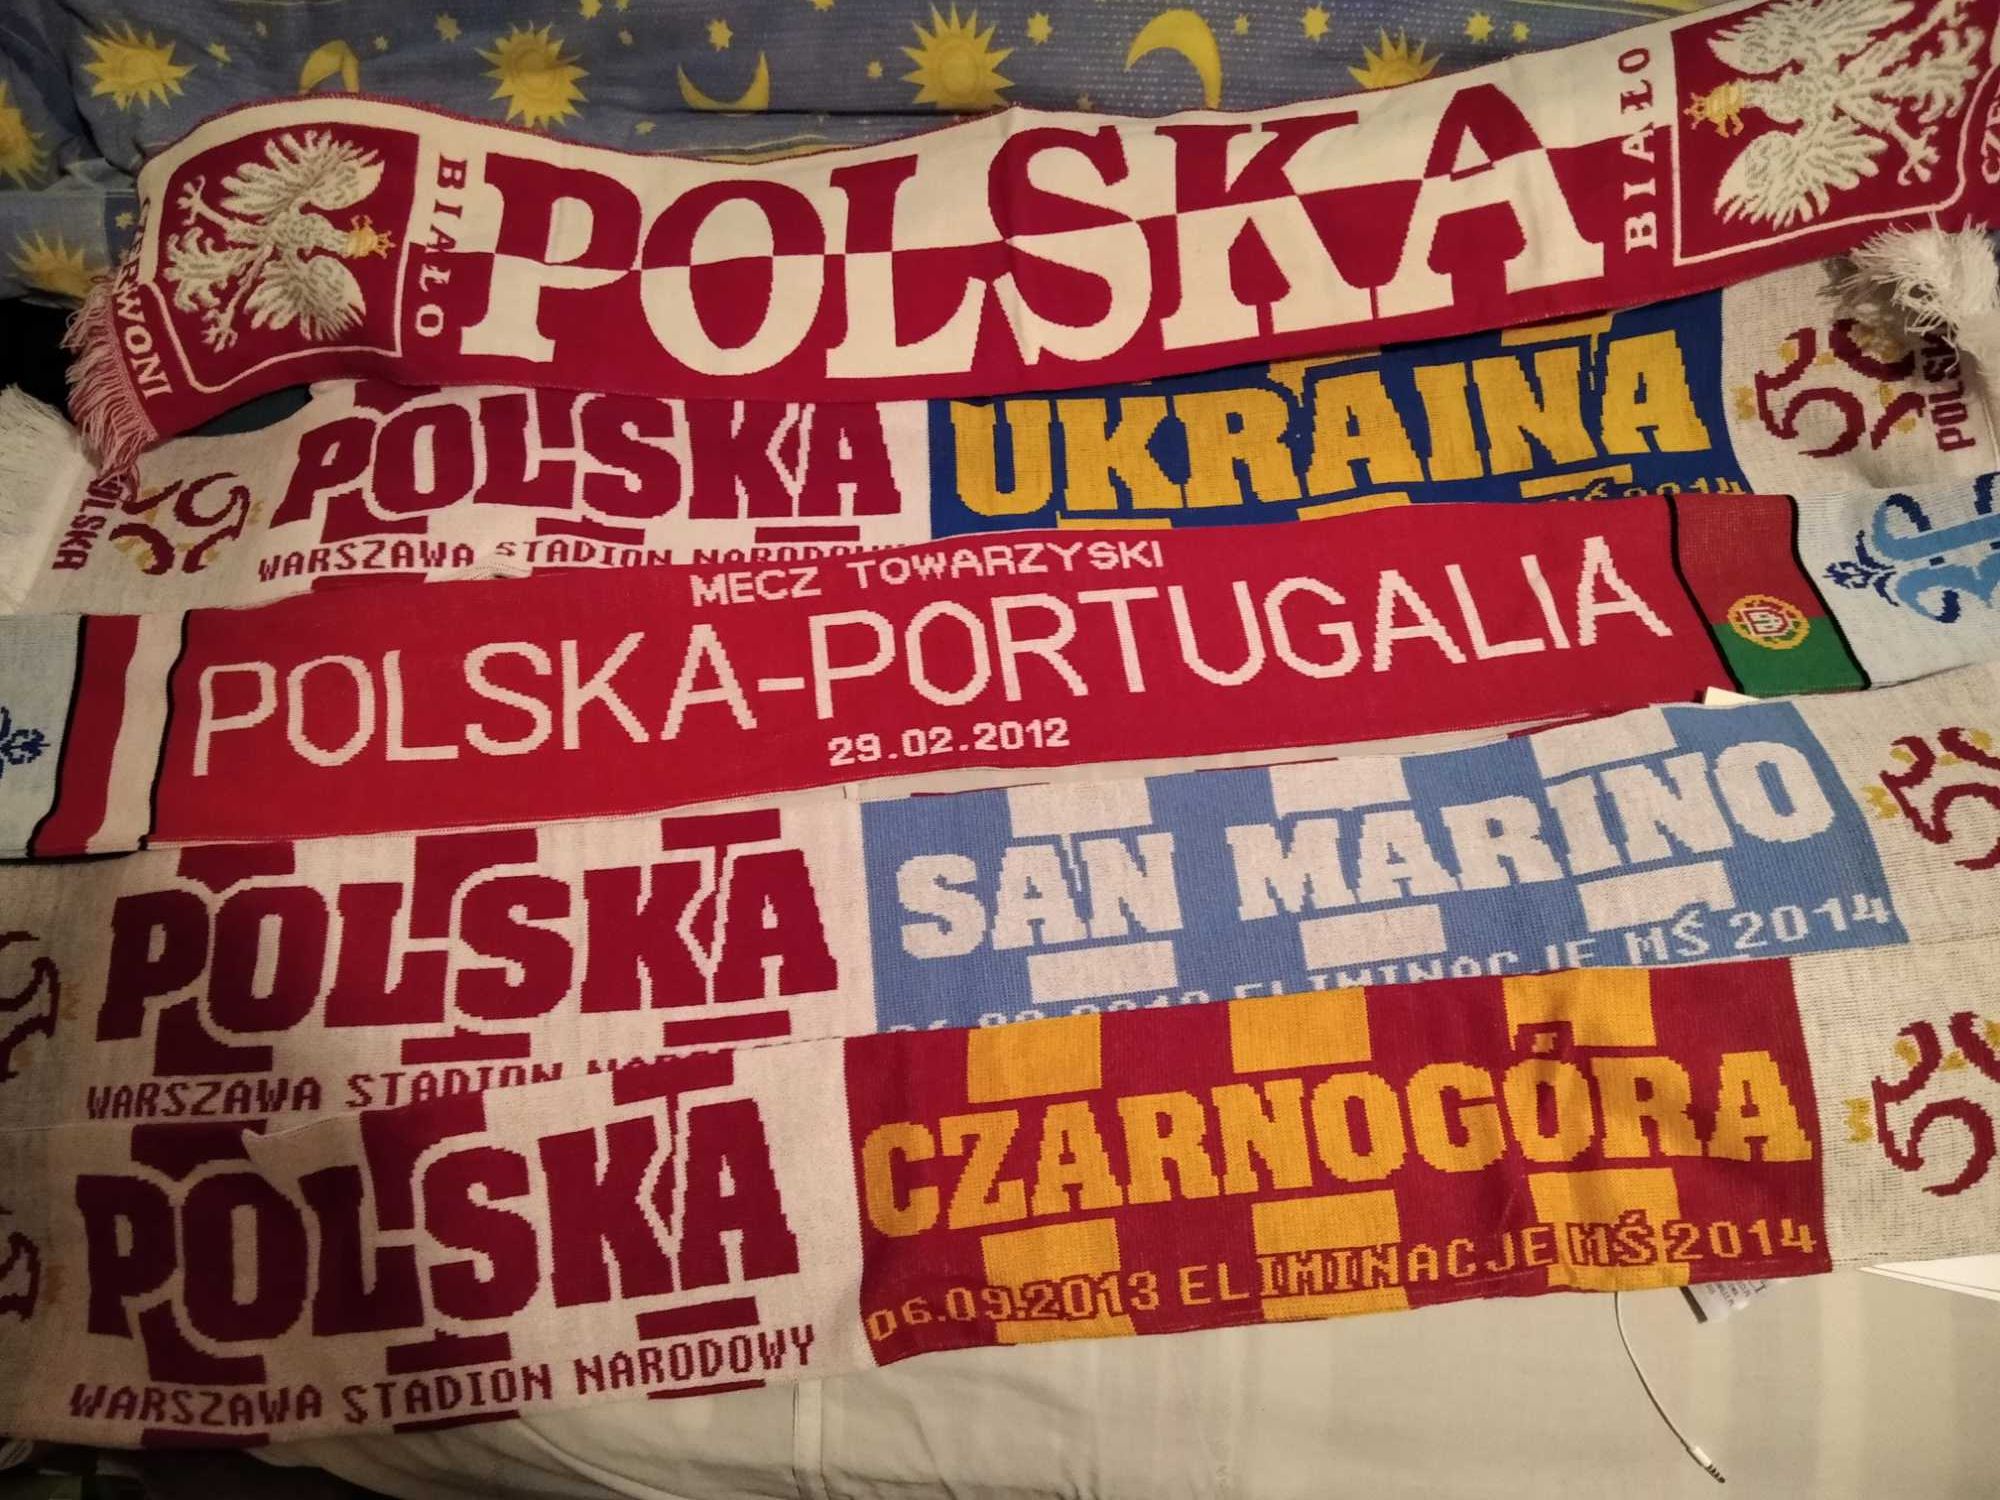 Szaliki Polska-San marino, Polska-Czarnogóra, Polska-Ukraina,